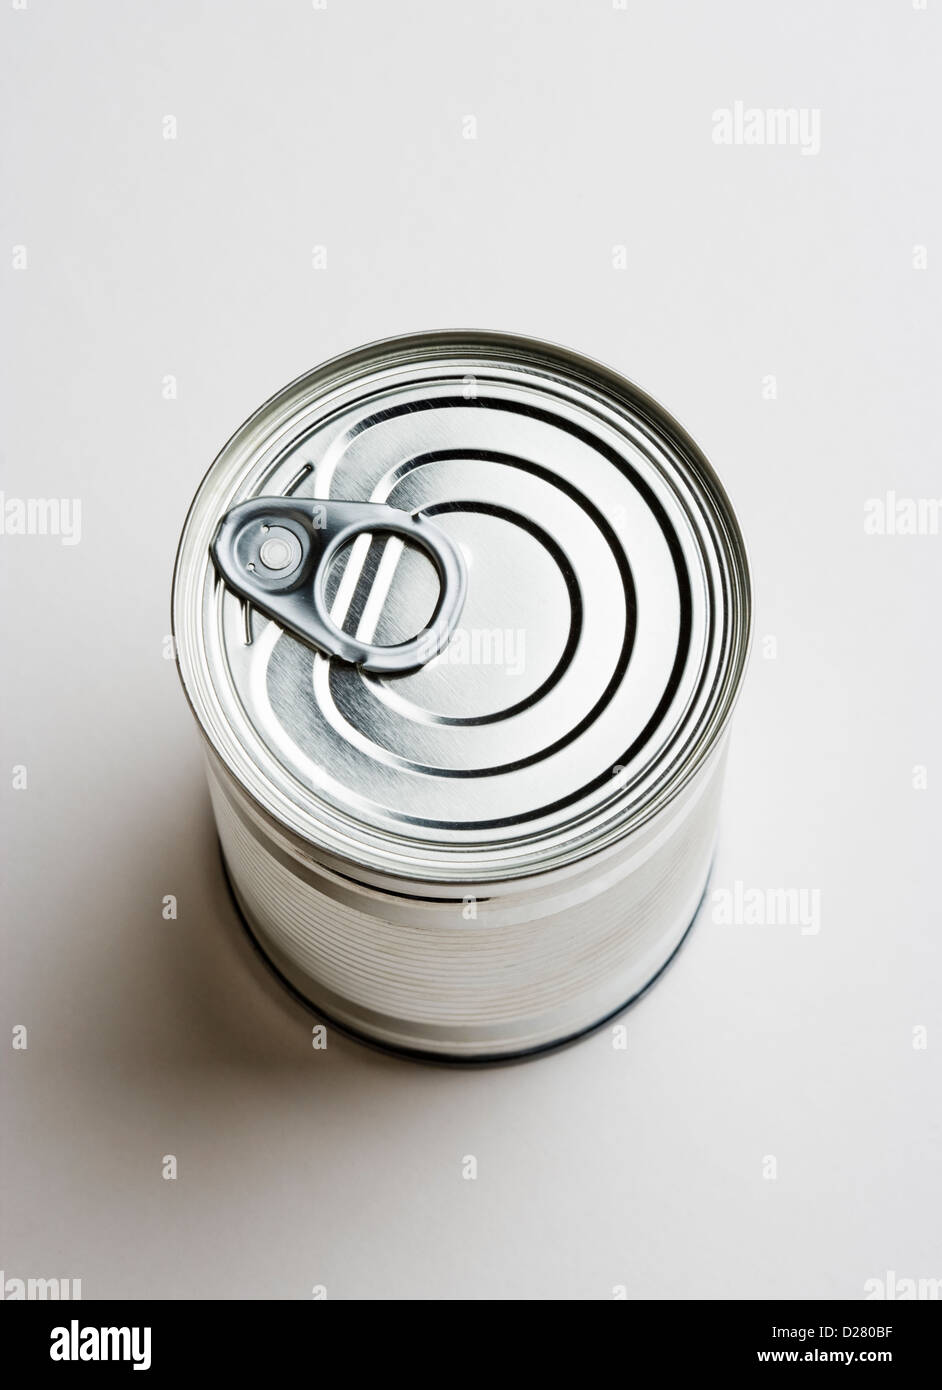 Tin can. Stock Photo